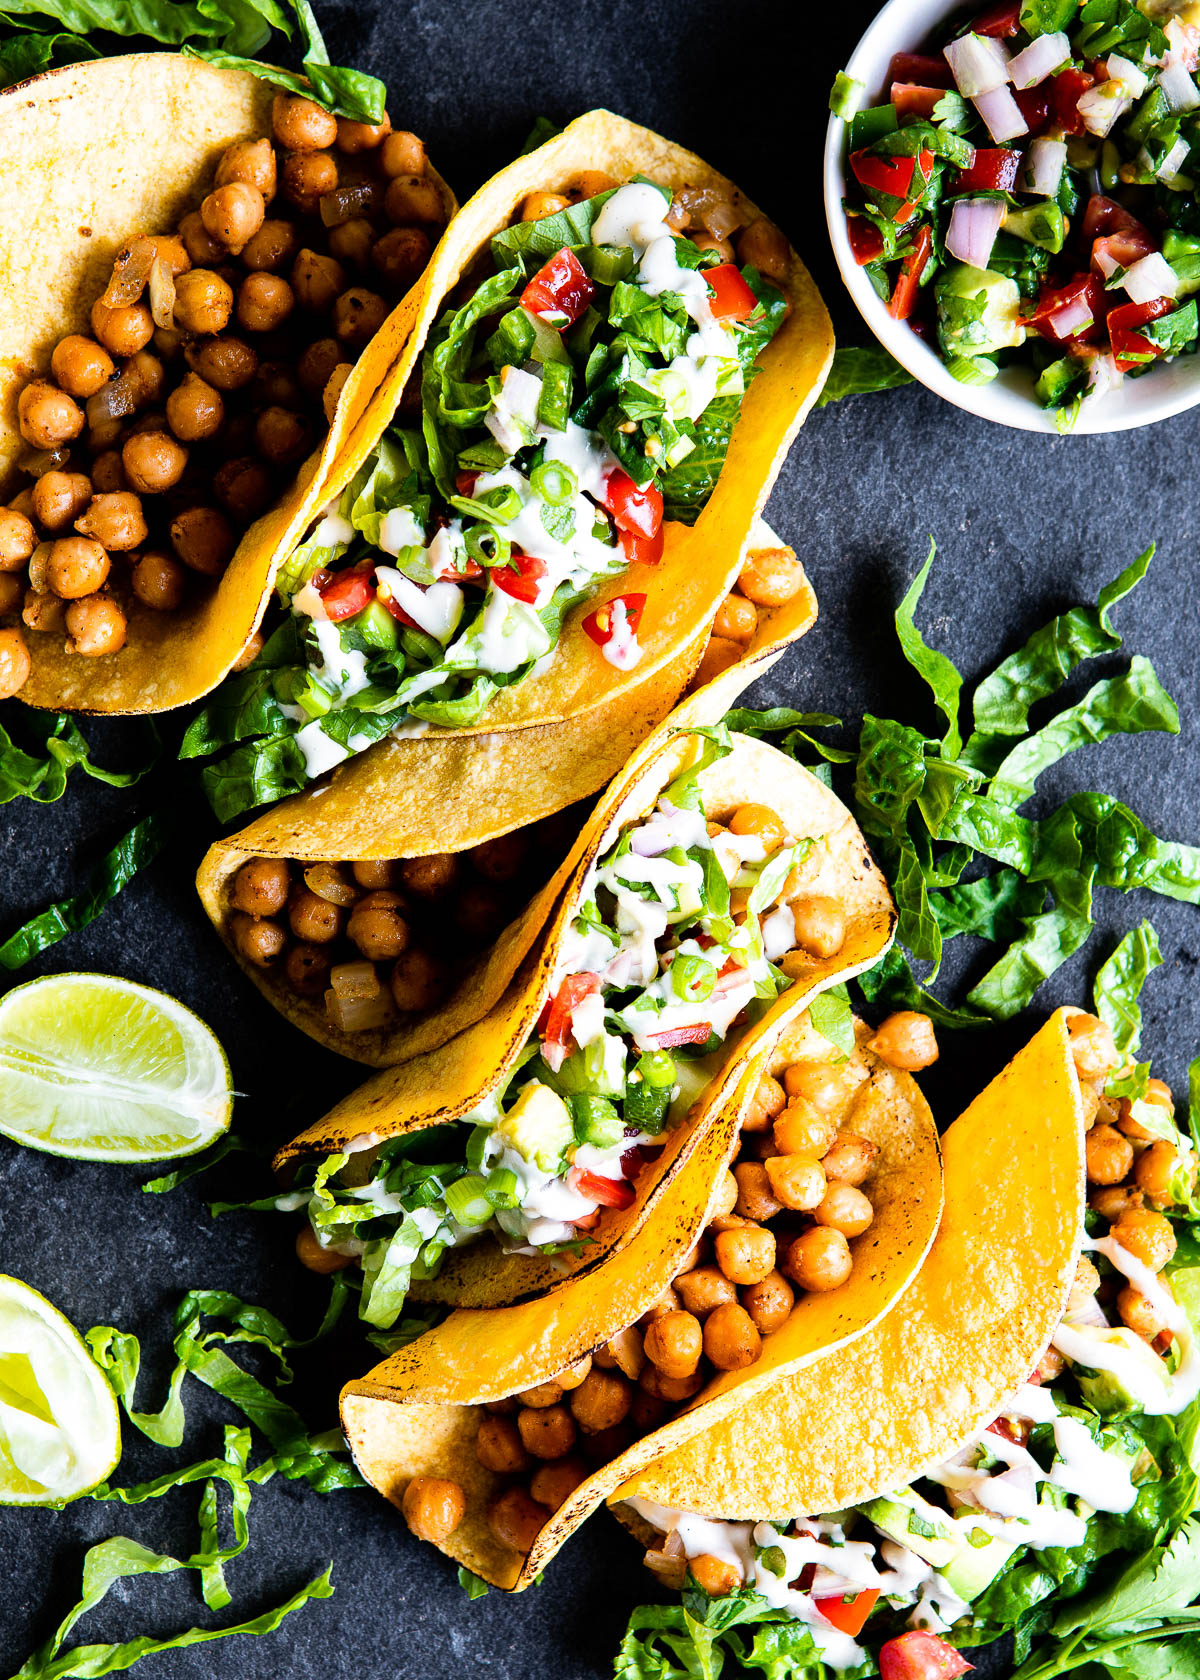 30 minute meals using plant based ingredients like vegetarian tacos